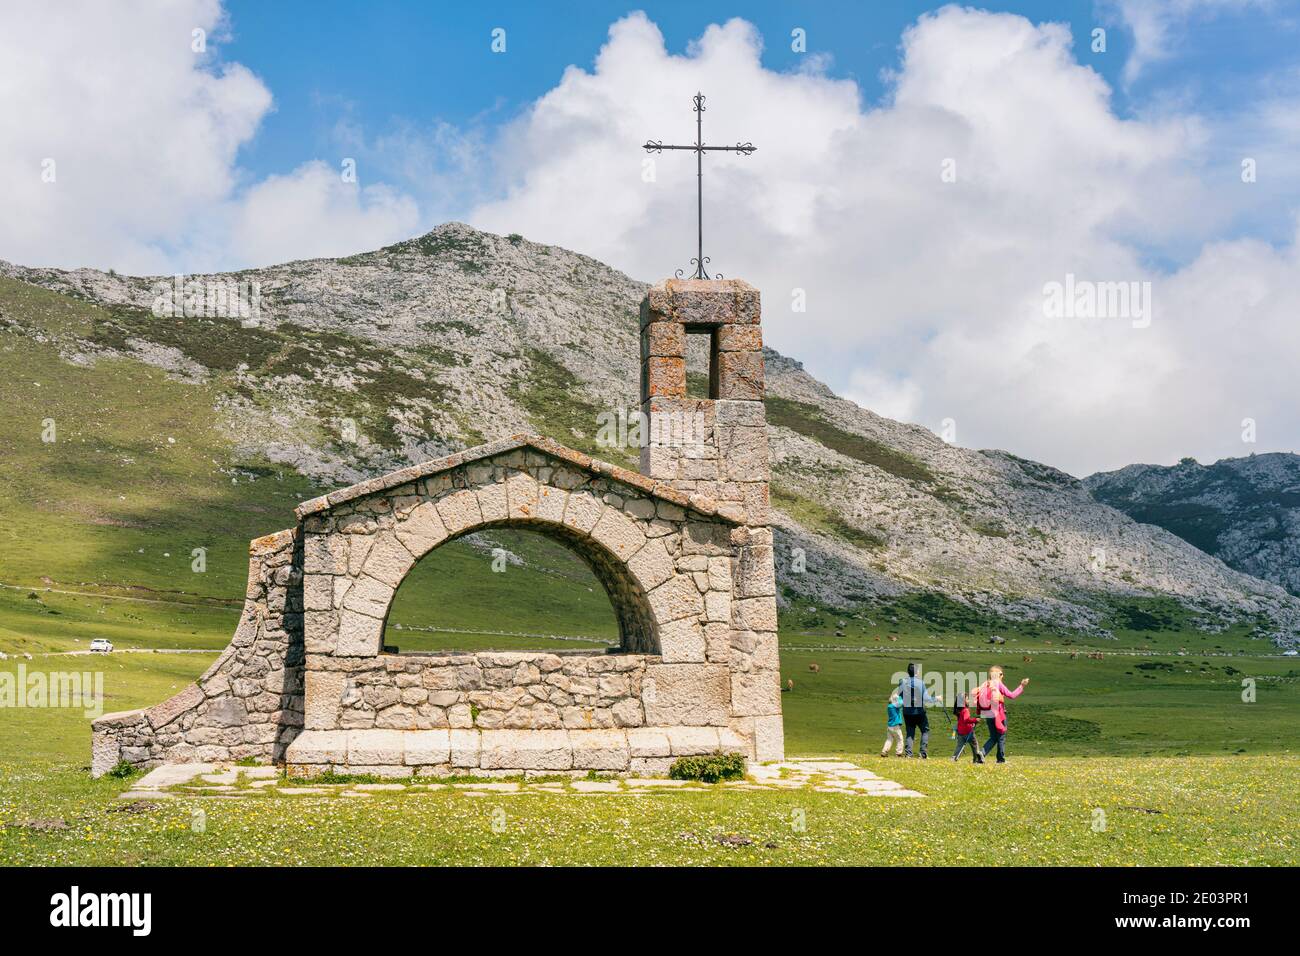 Familie von Wanderern in der Ermita del Pastor, Parque Nacional de los Picos de Europa, Asturien, Spanien. Kapelle des Guten Hirten, Zinnen Europas Nati Stockfoto